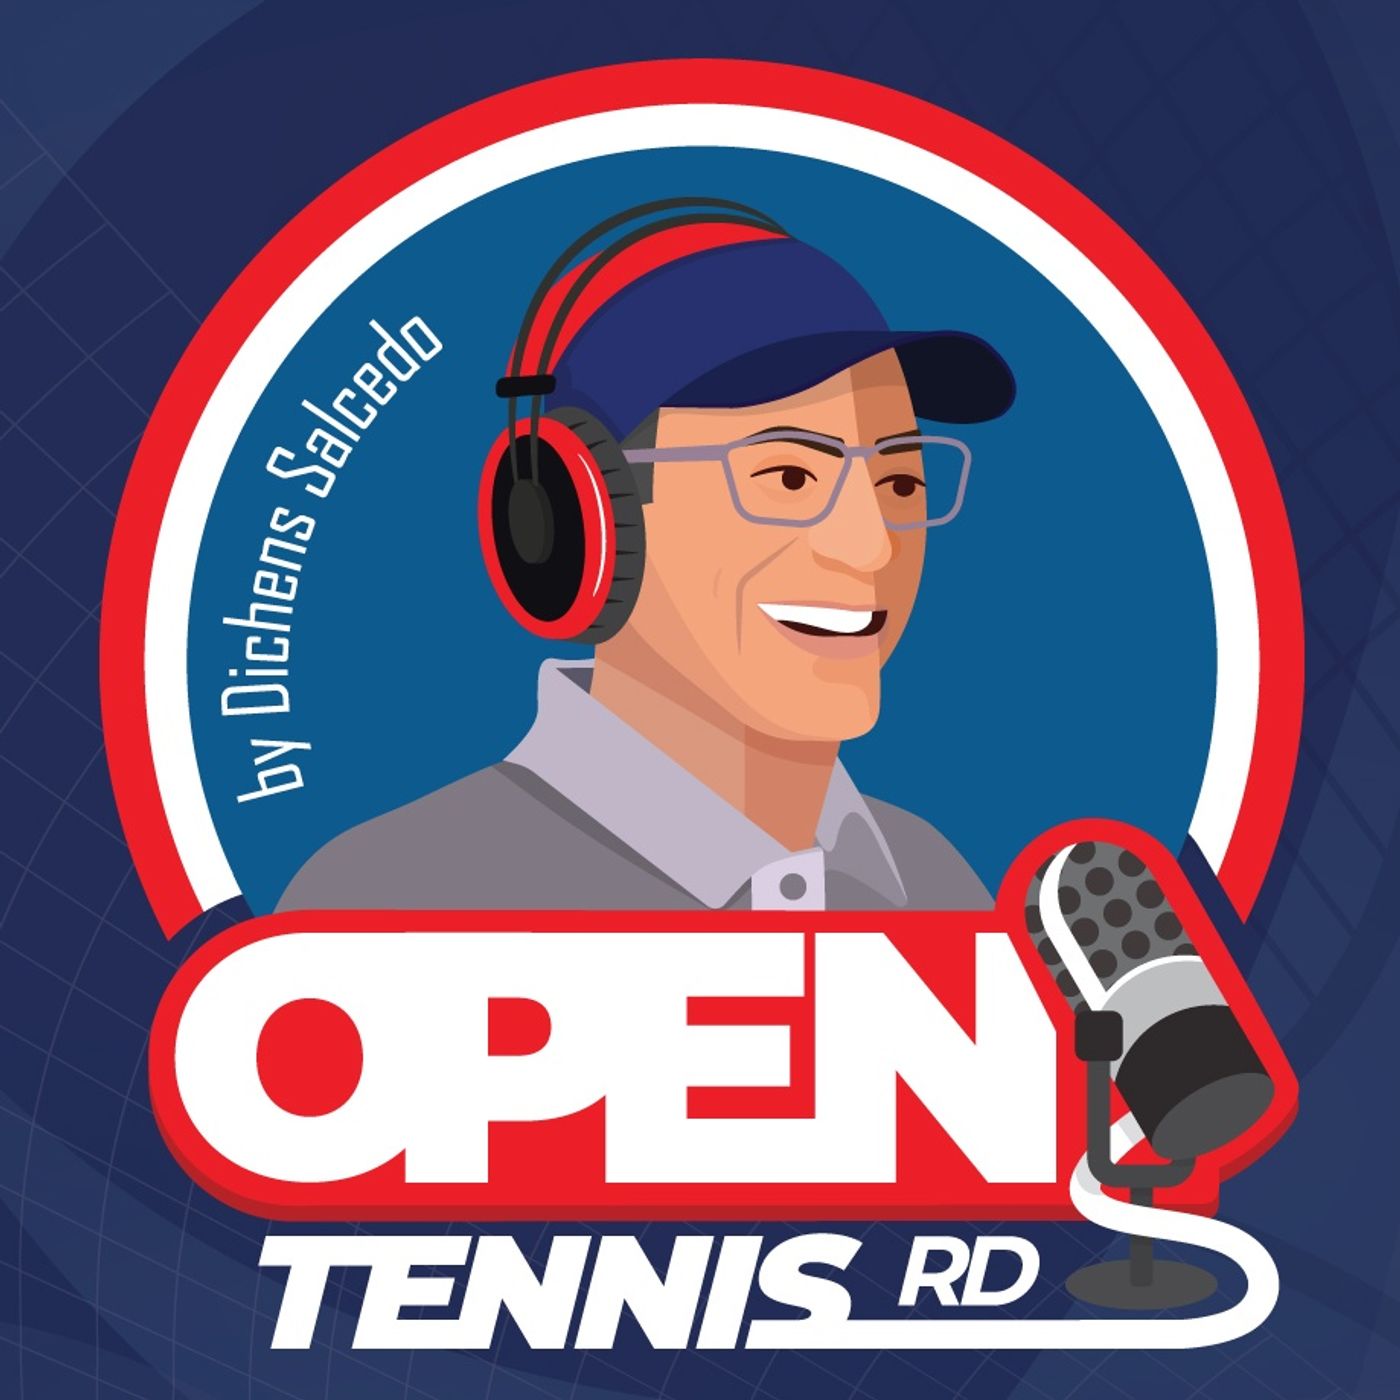 Episodio 10 Open Tennis RD: Resumen 2019